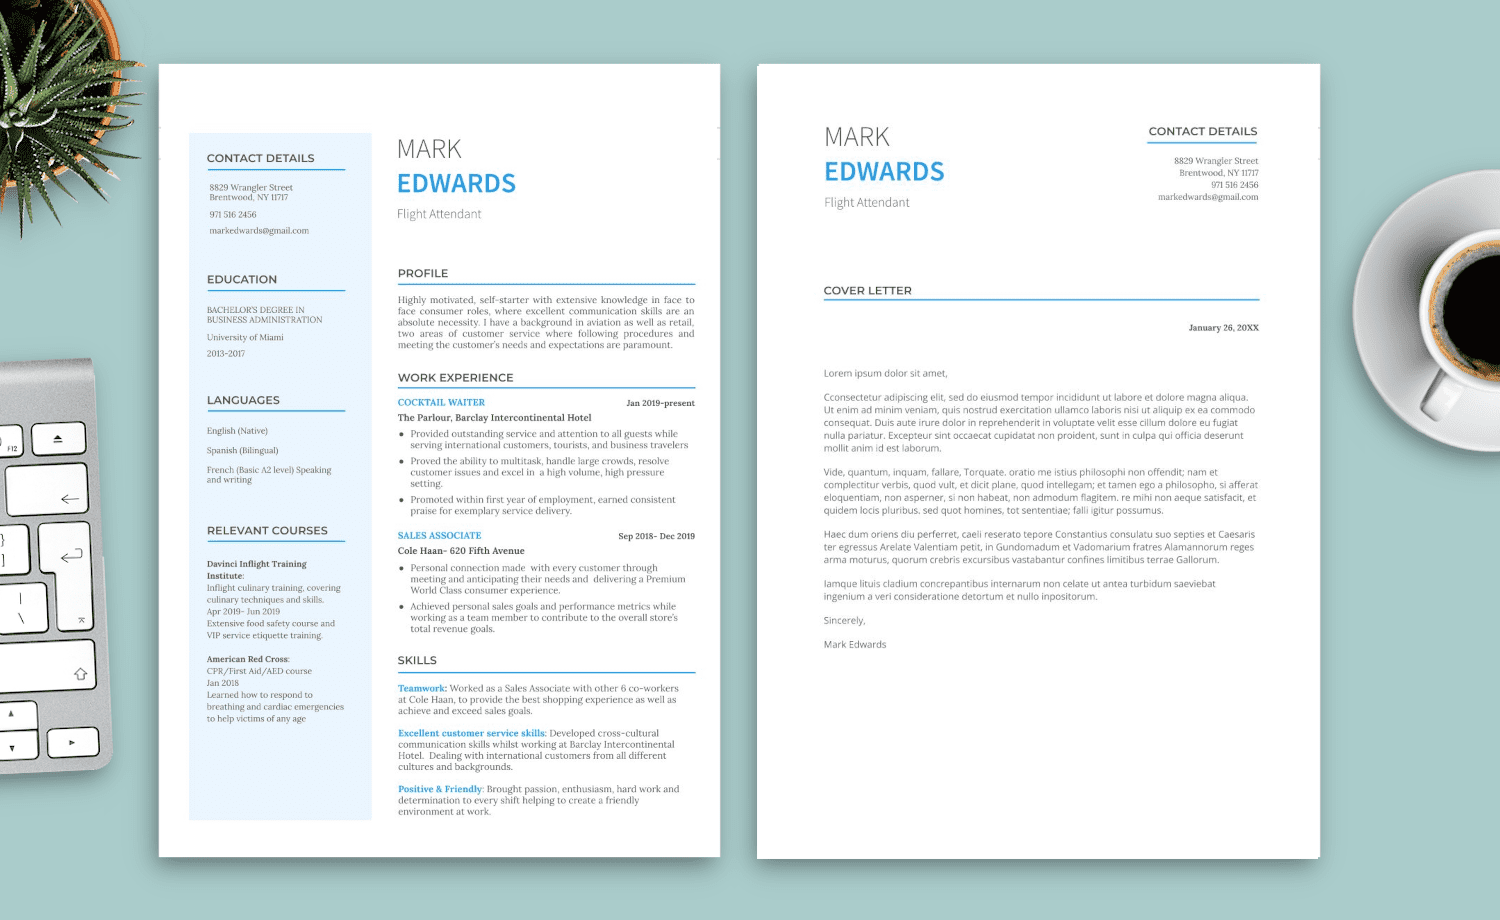 blue resume and cover letter for flight attendant